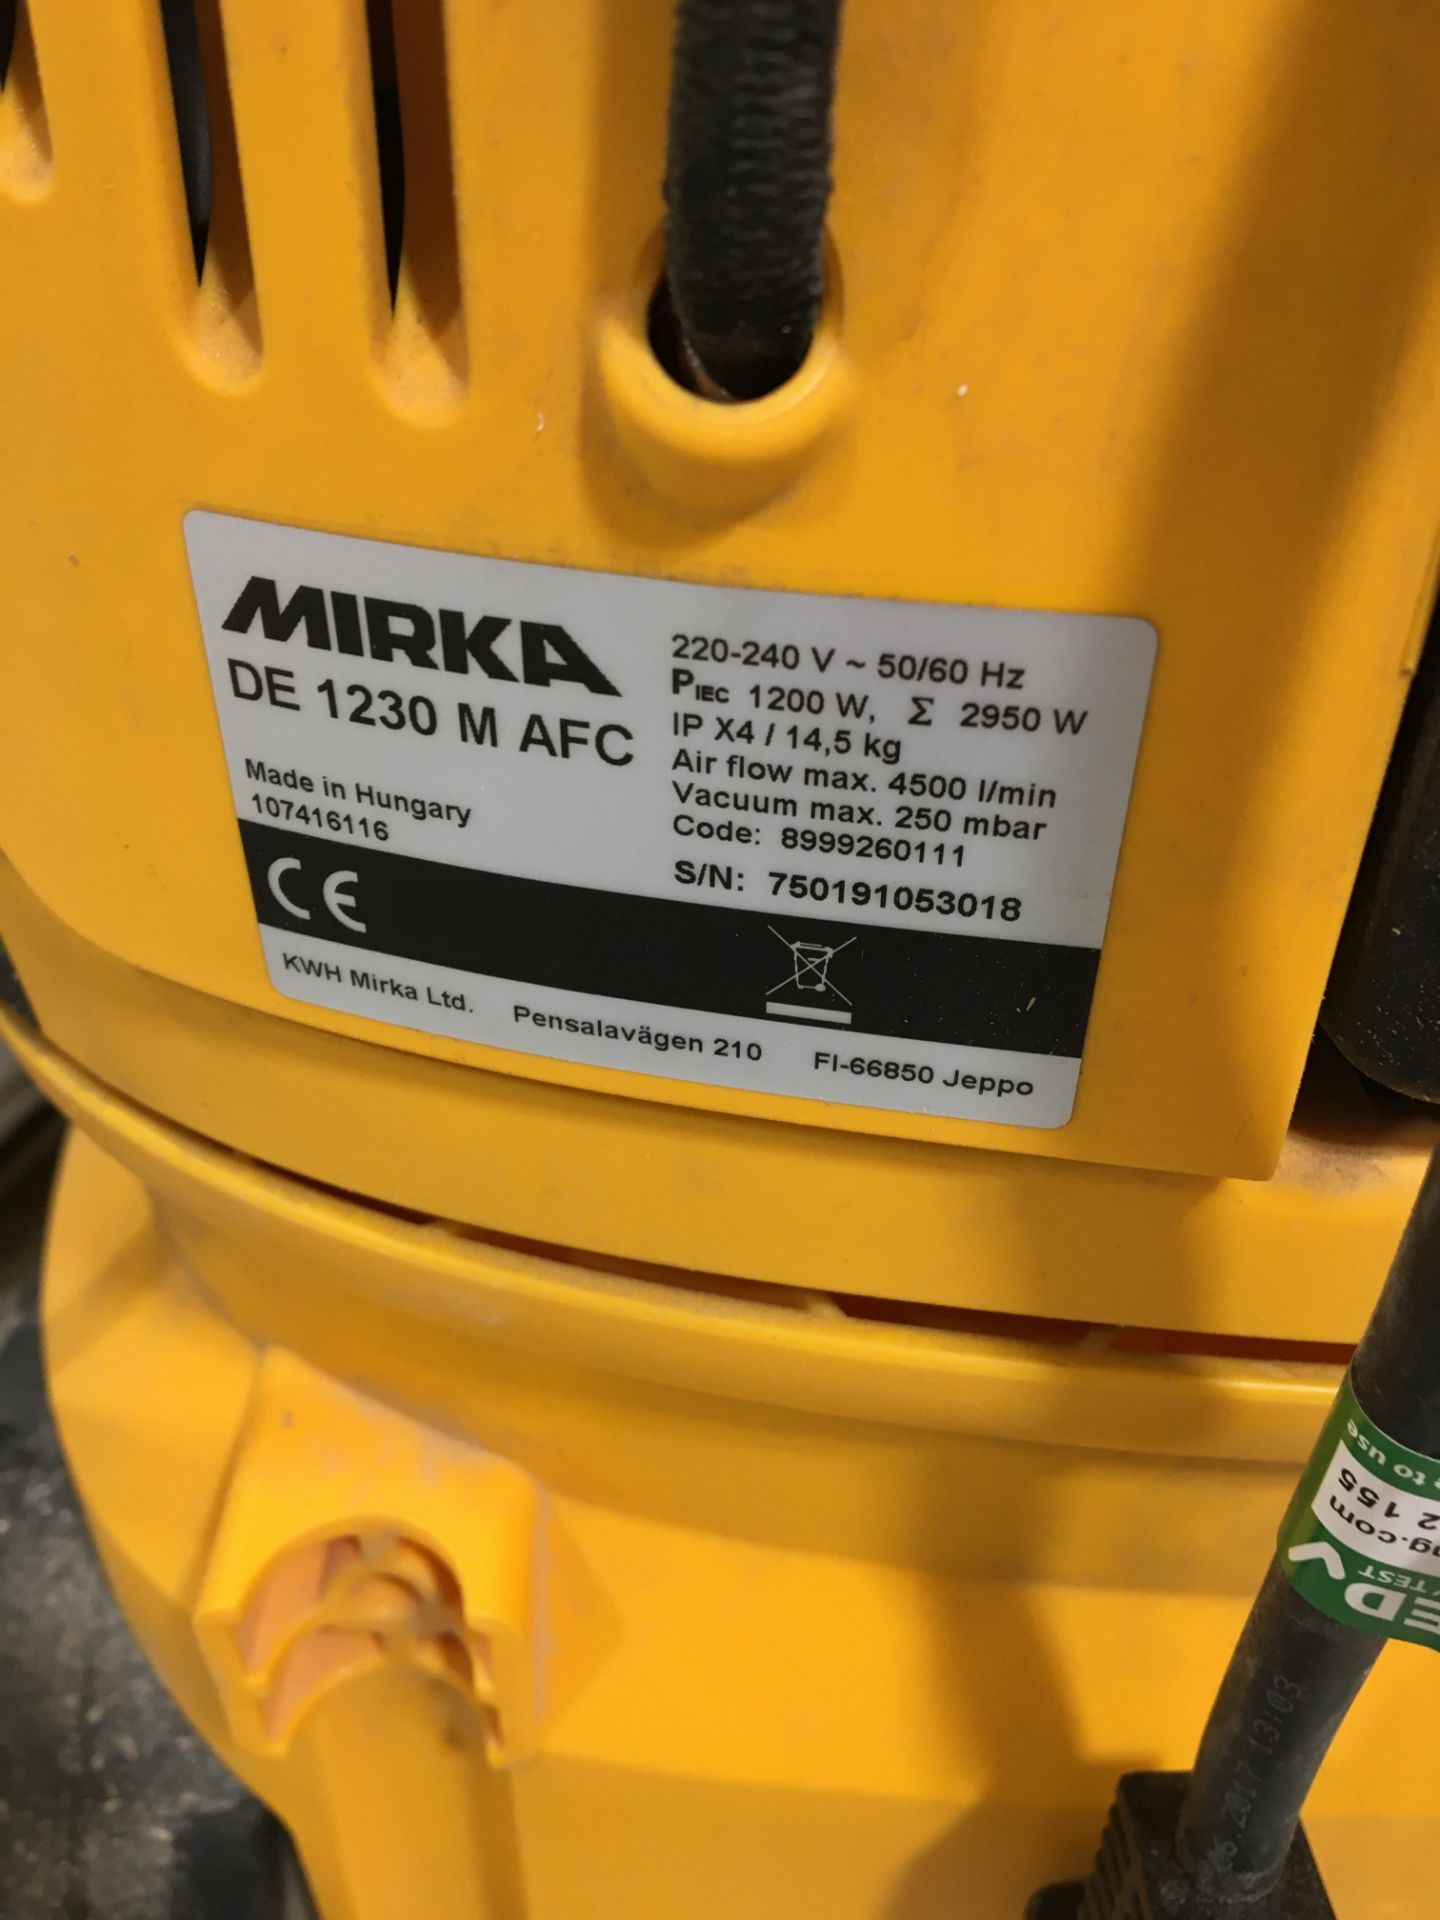 Mirka DE 1230 M AFC mobile dust extraction unit, Serial No. 750191053018 with Mirka Deros 650 - Image 2 of 3